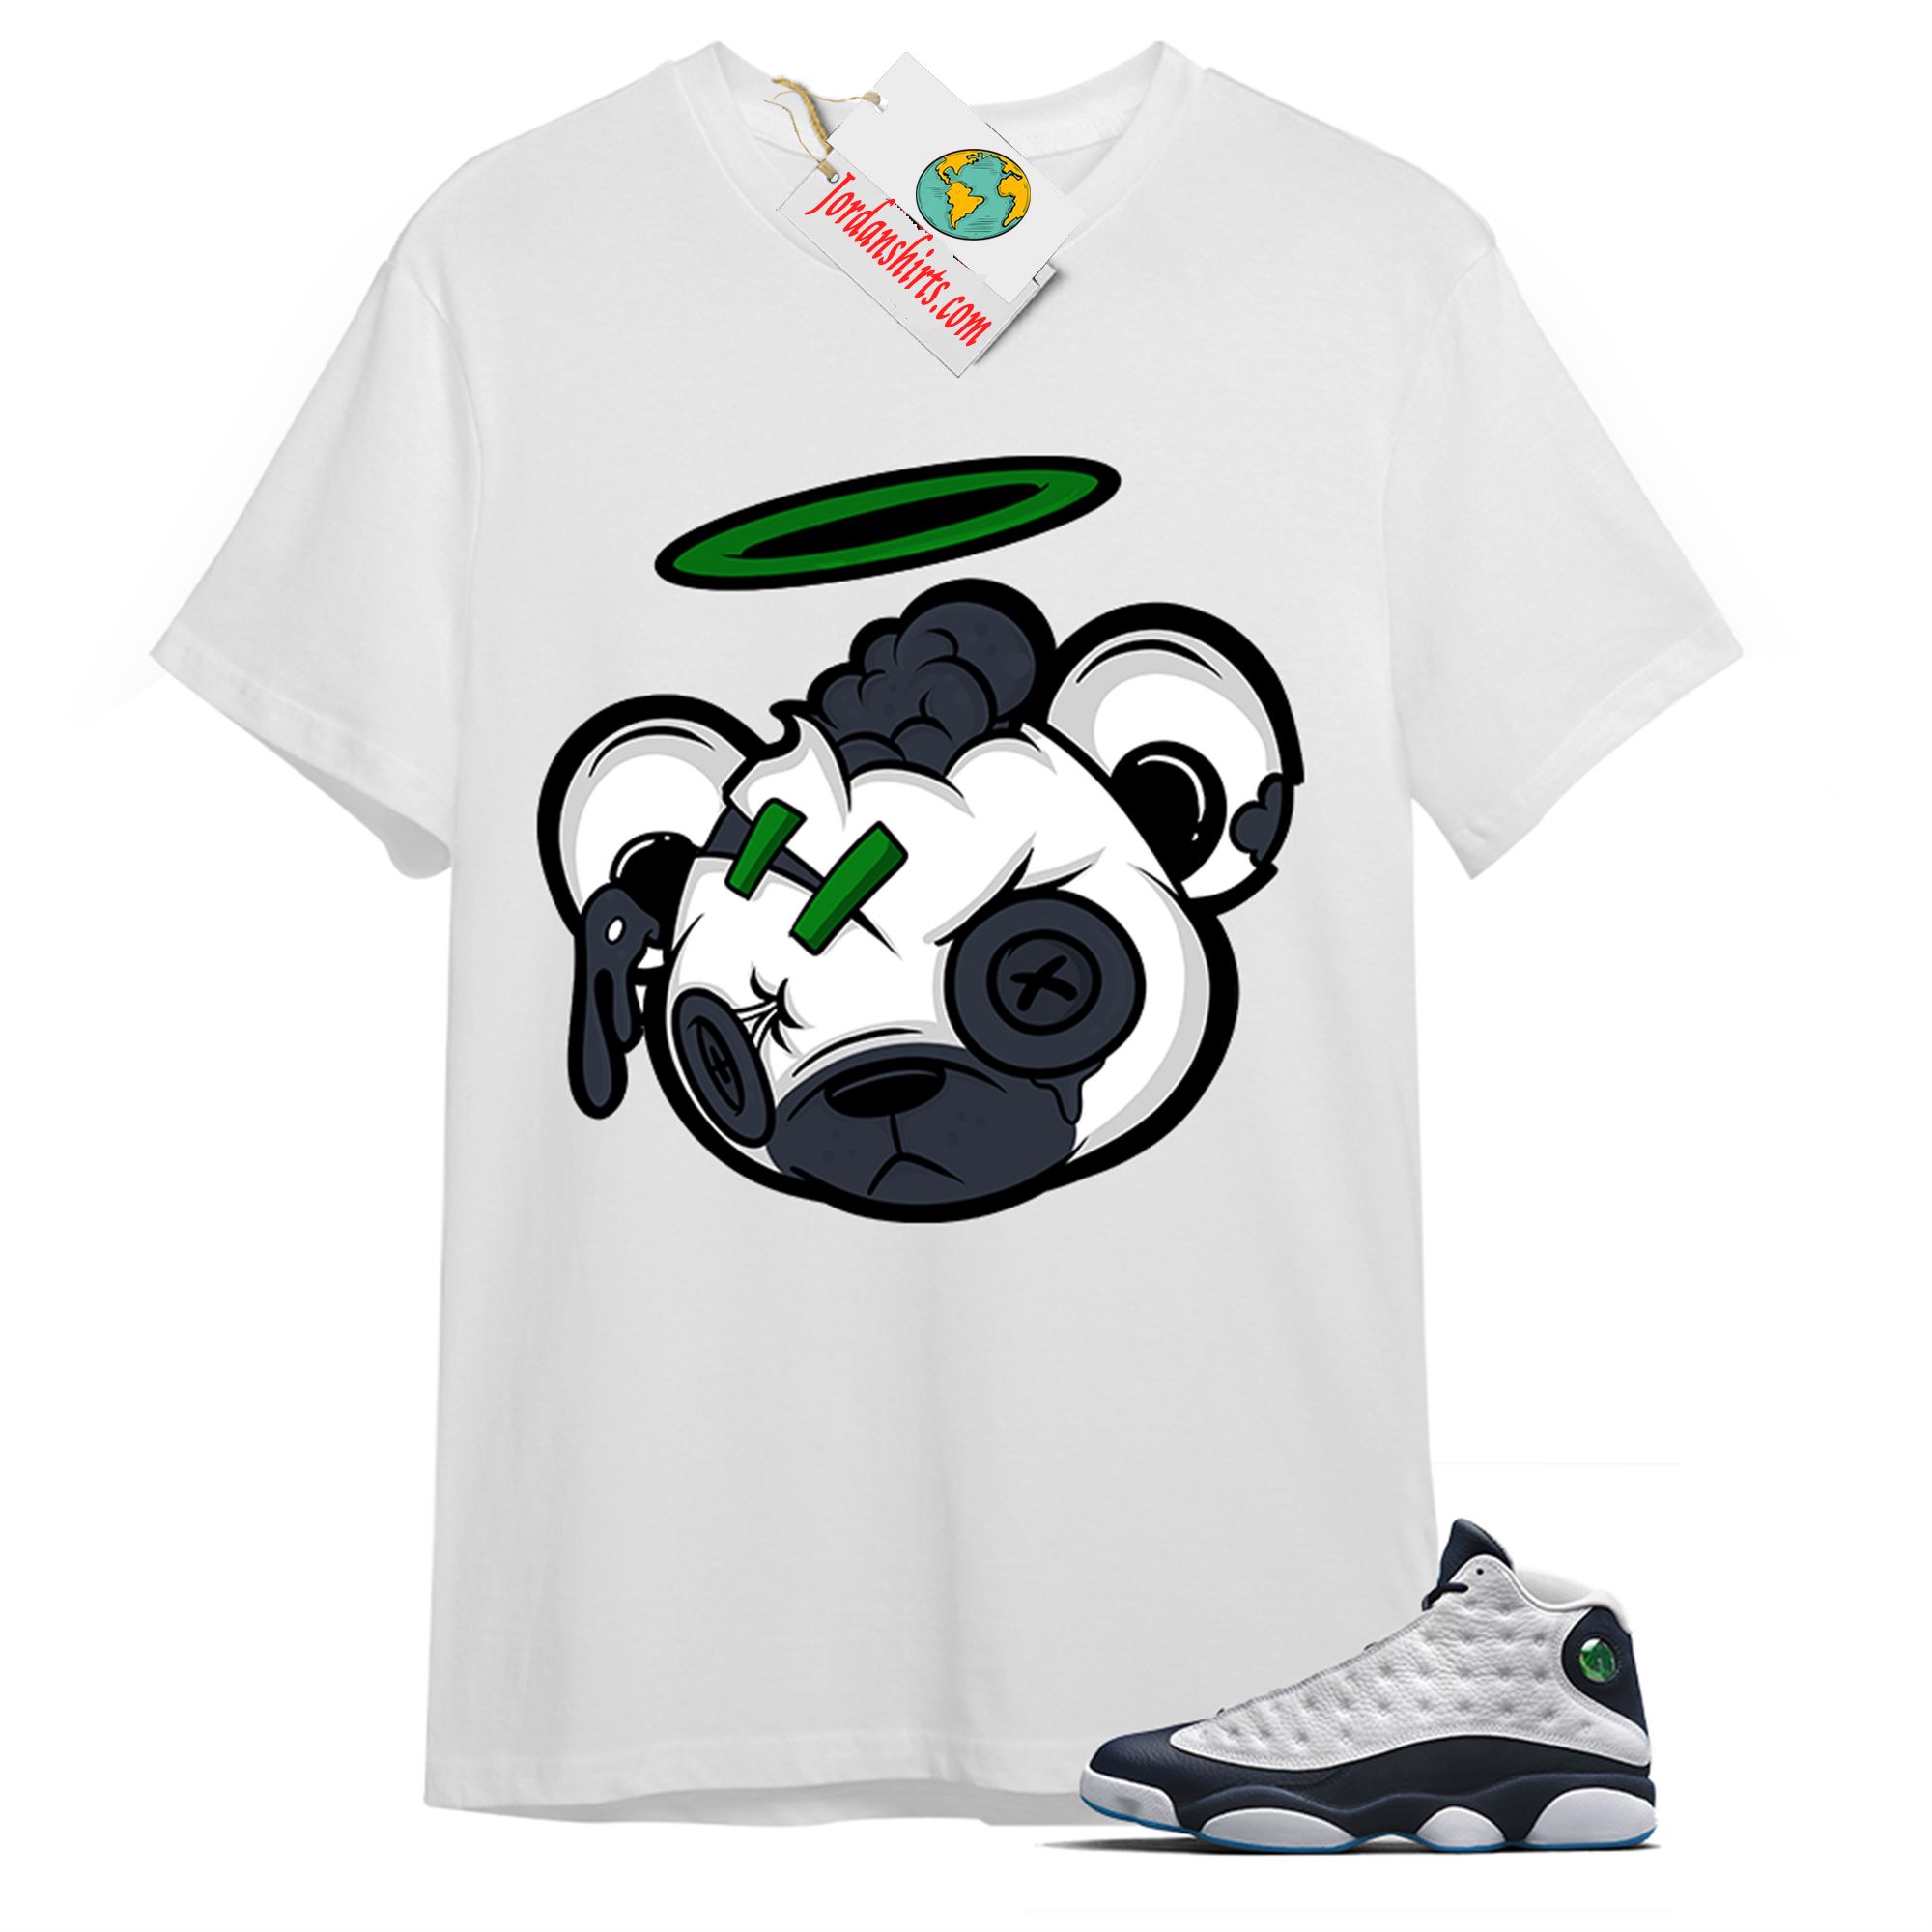 Jordan 13 Shirt, Halo Teddy White T-shirt Air Jordan 13 Obsidian 13s Plus Size Up To 5xl